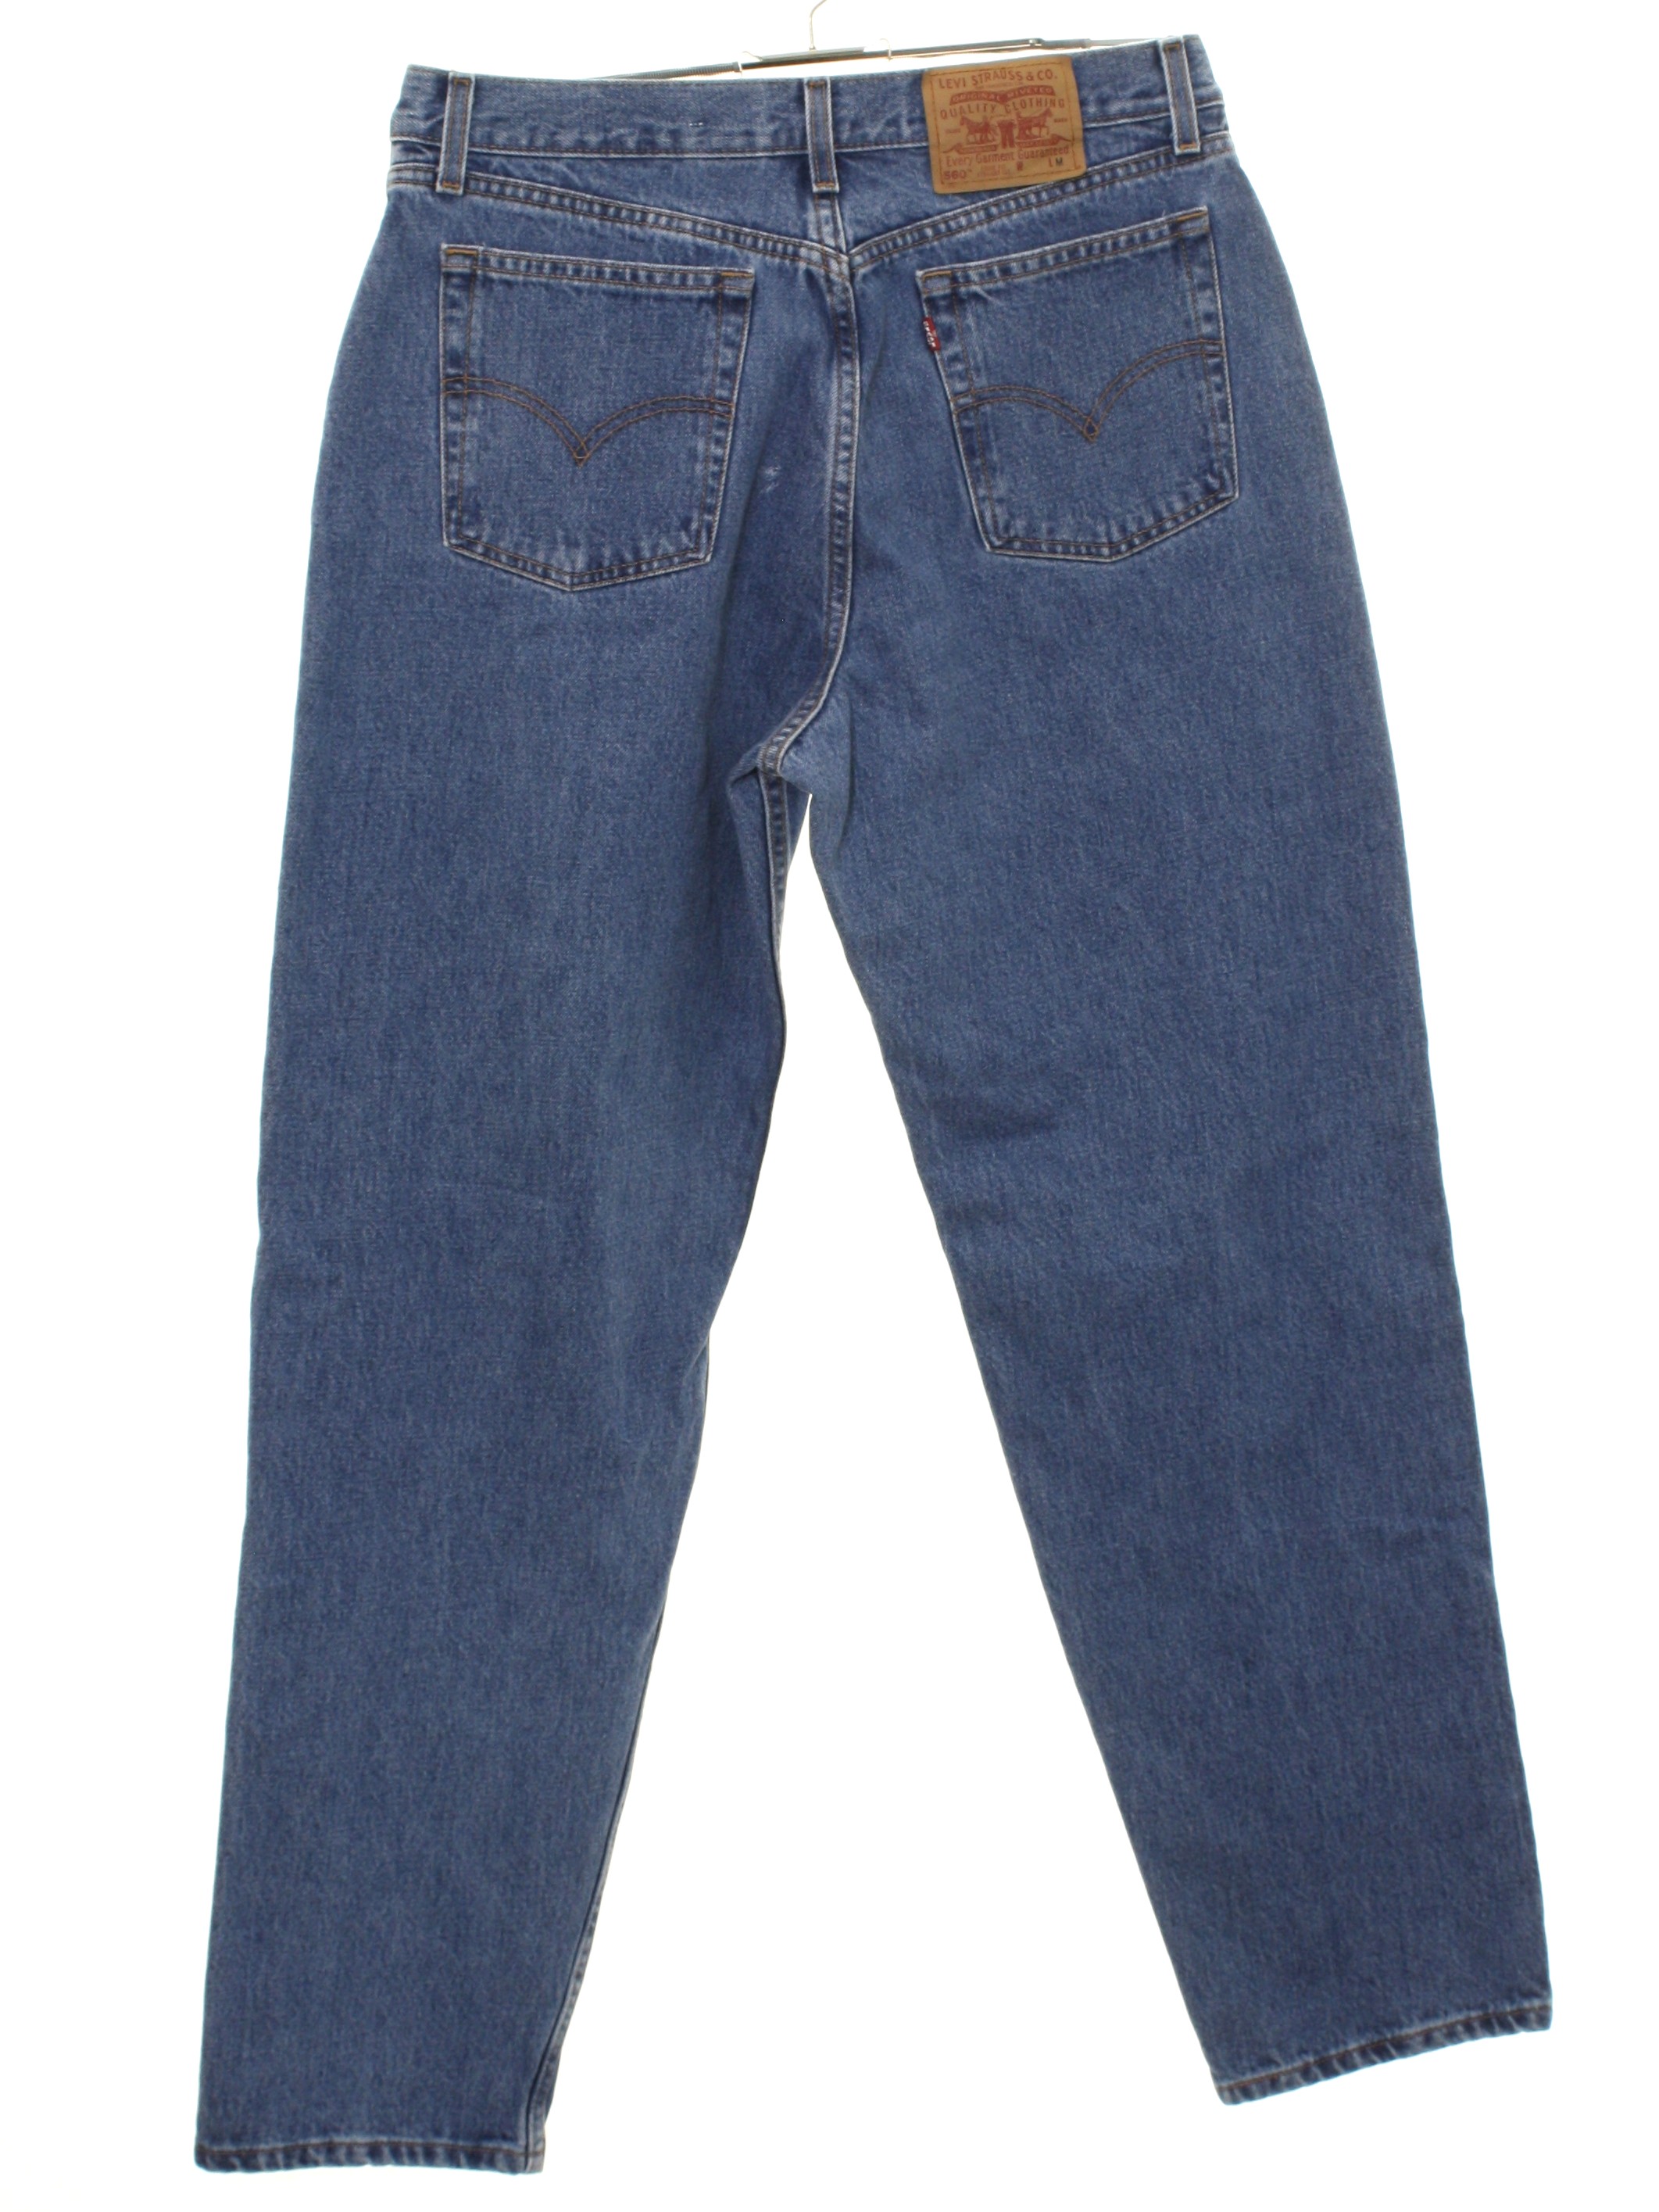 1990s Levis 560 Pants: 90s -Levis 560- Womens blue cotton denim levis 550  loose fit straight leg denim high waisted jeans pants with zipper fly  closure with button. Five pocket style -